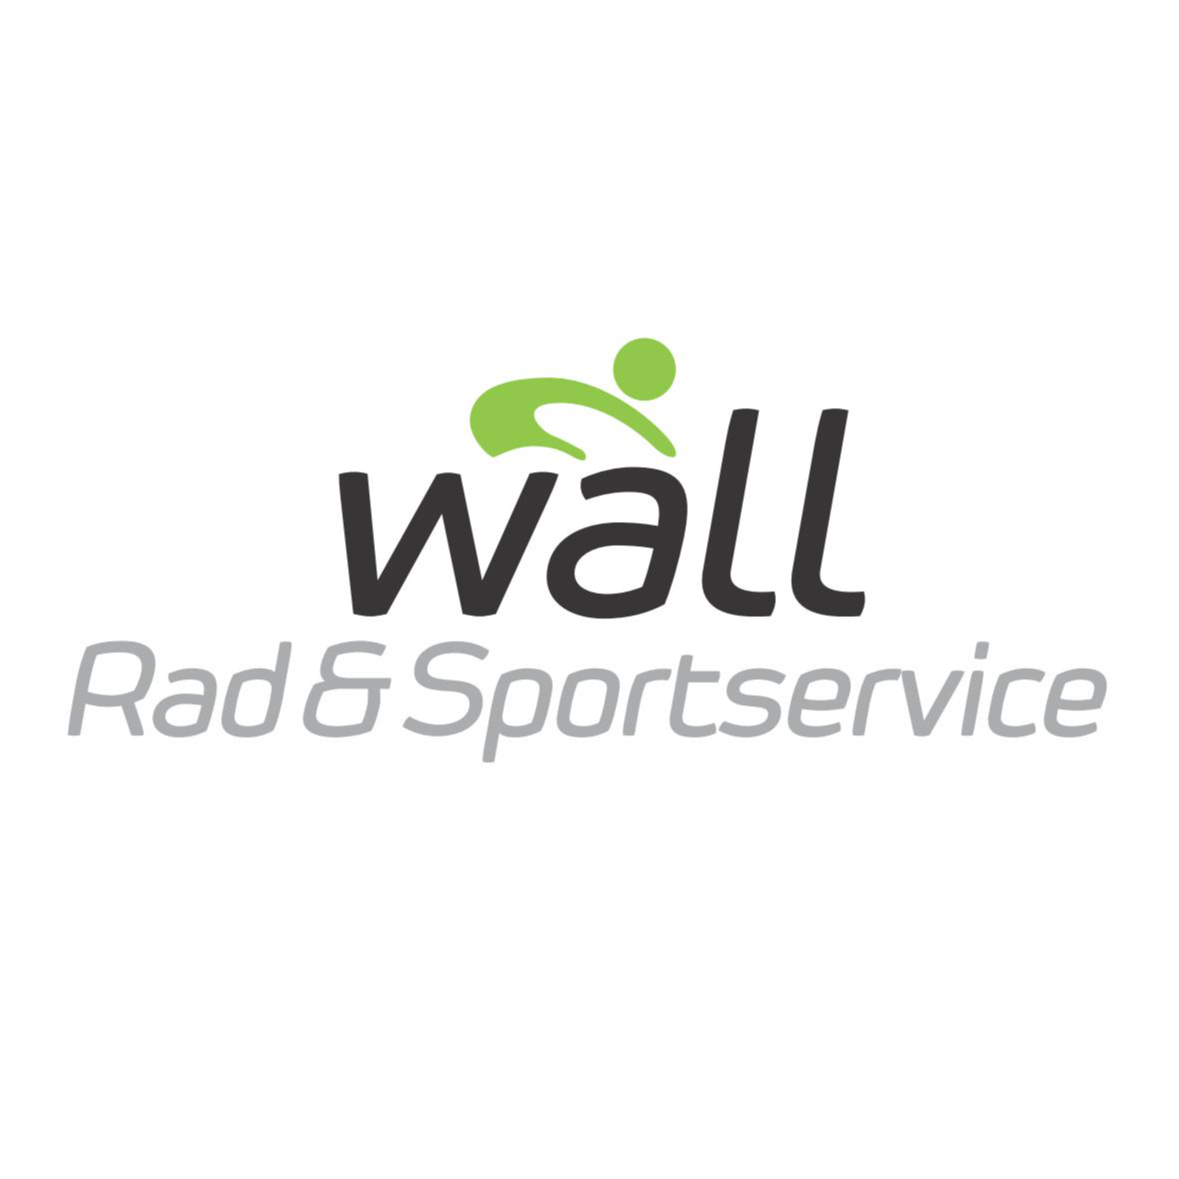 Logo Rad & Sportservice Wall